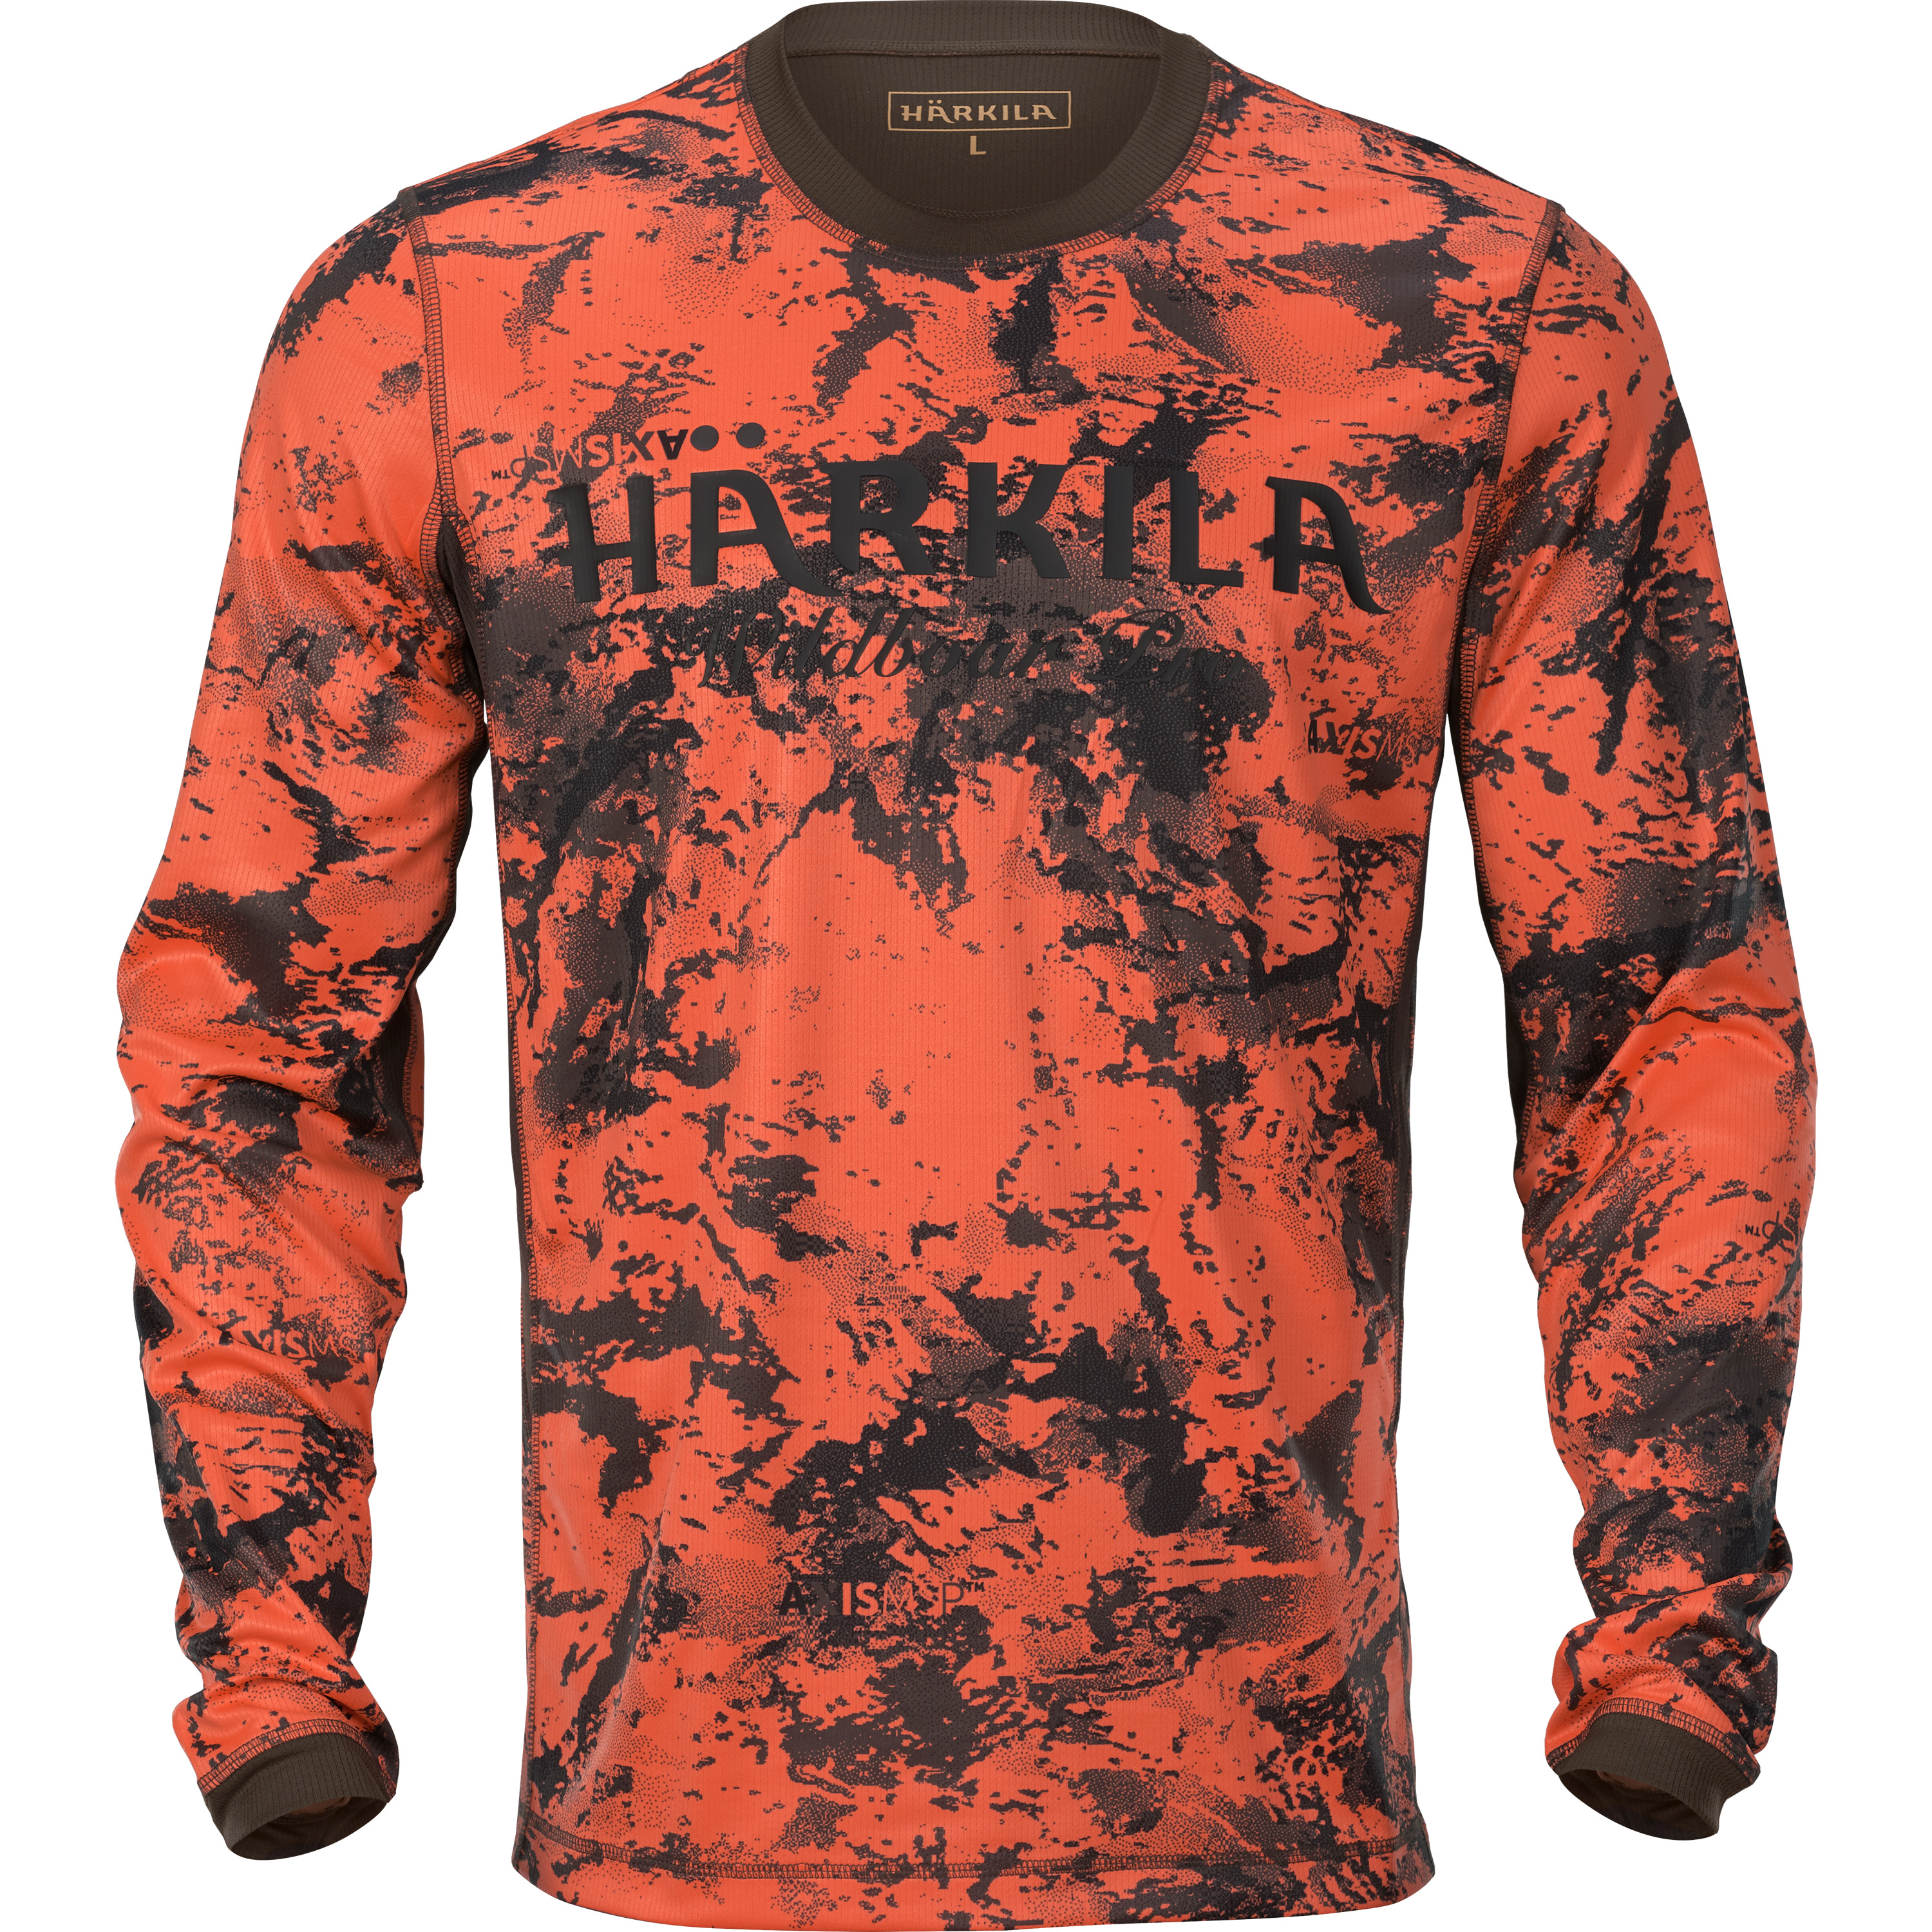 Härkila Men's Wildboar Pro L/S T-shirt AXIS MSP® Orange Blaze/Shadow brown M, Axis Msp Orange Blaze/Shadow Brown